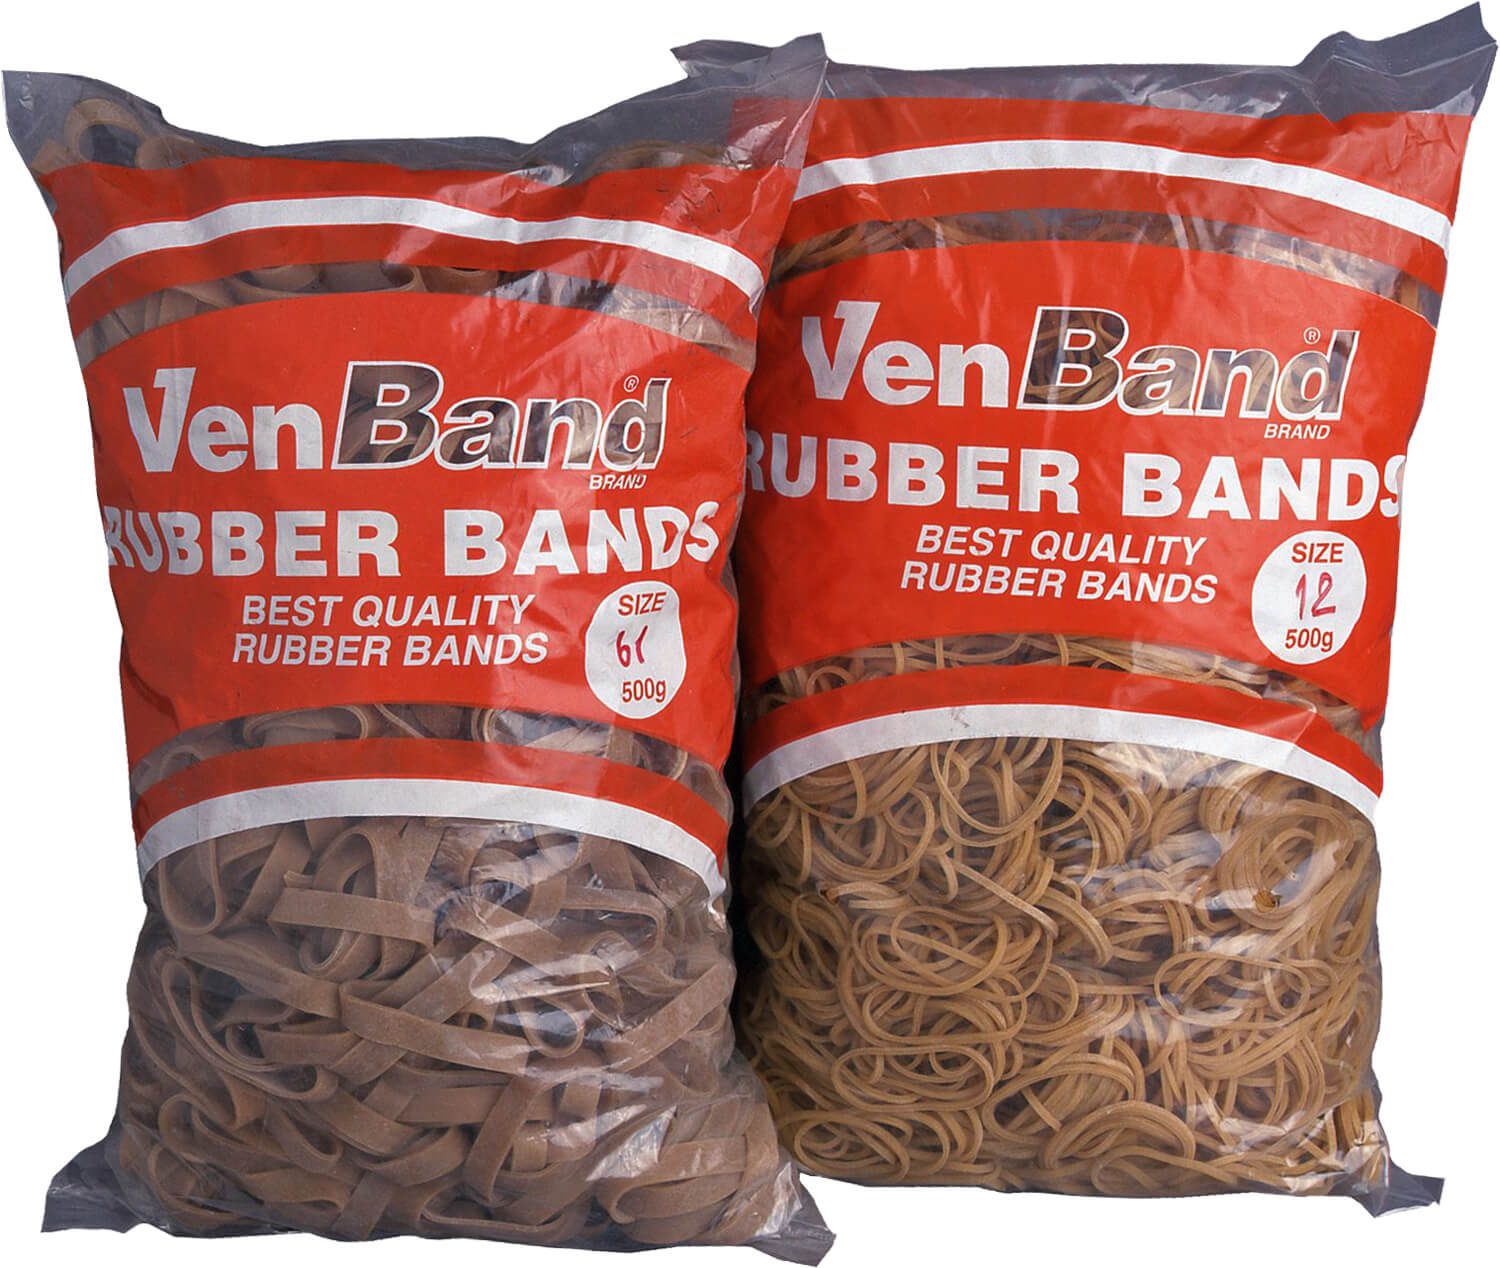 branded rubber bands